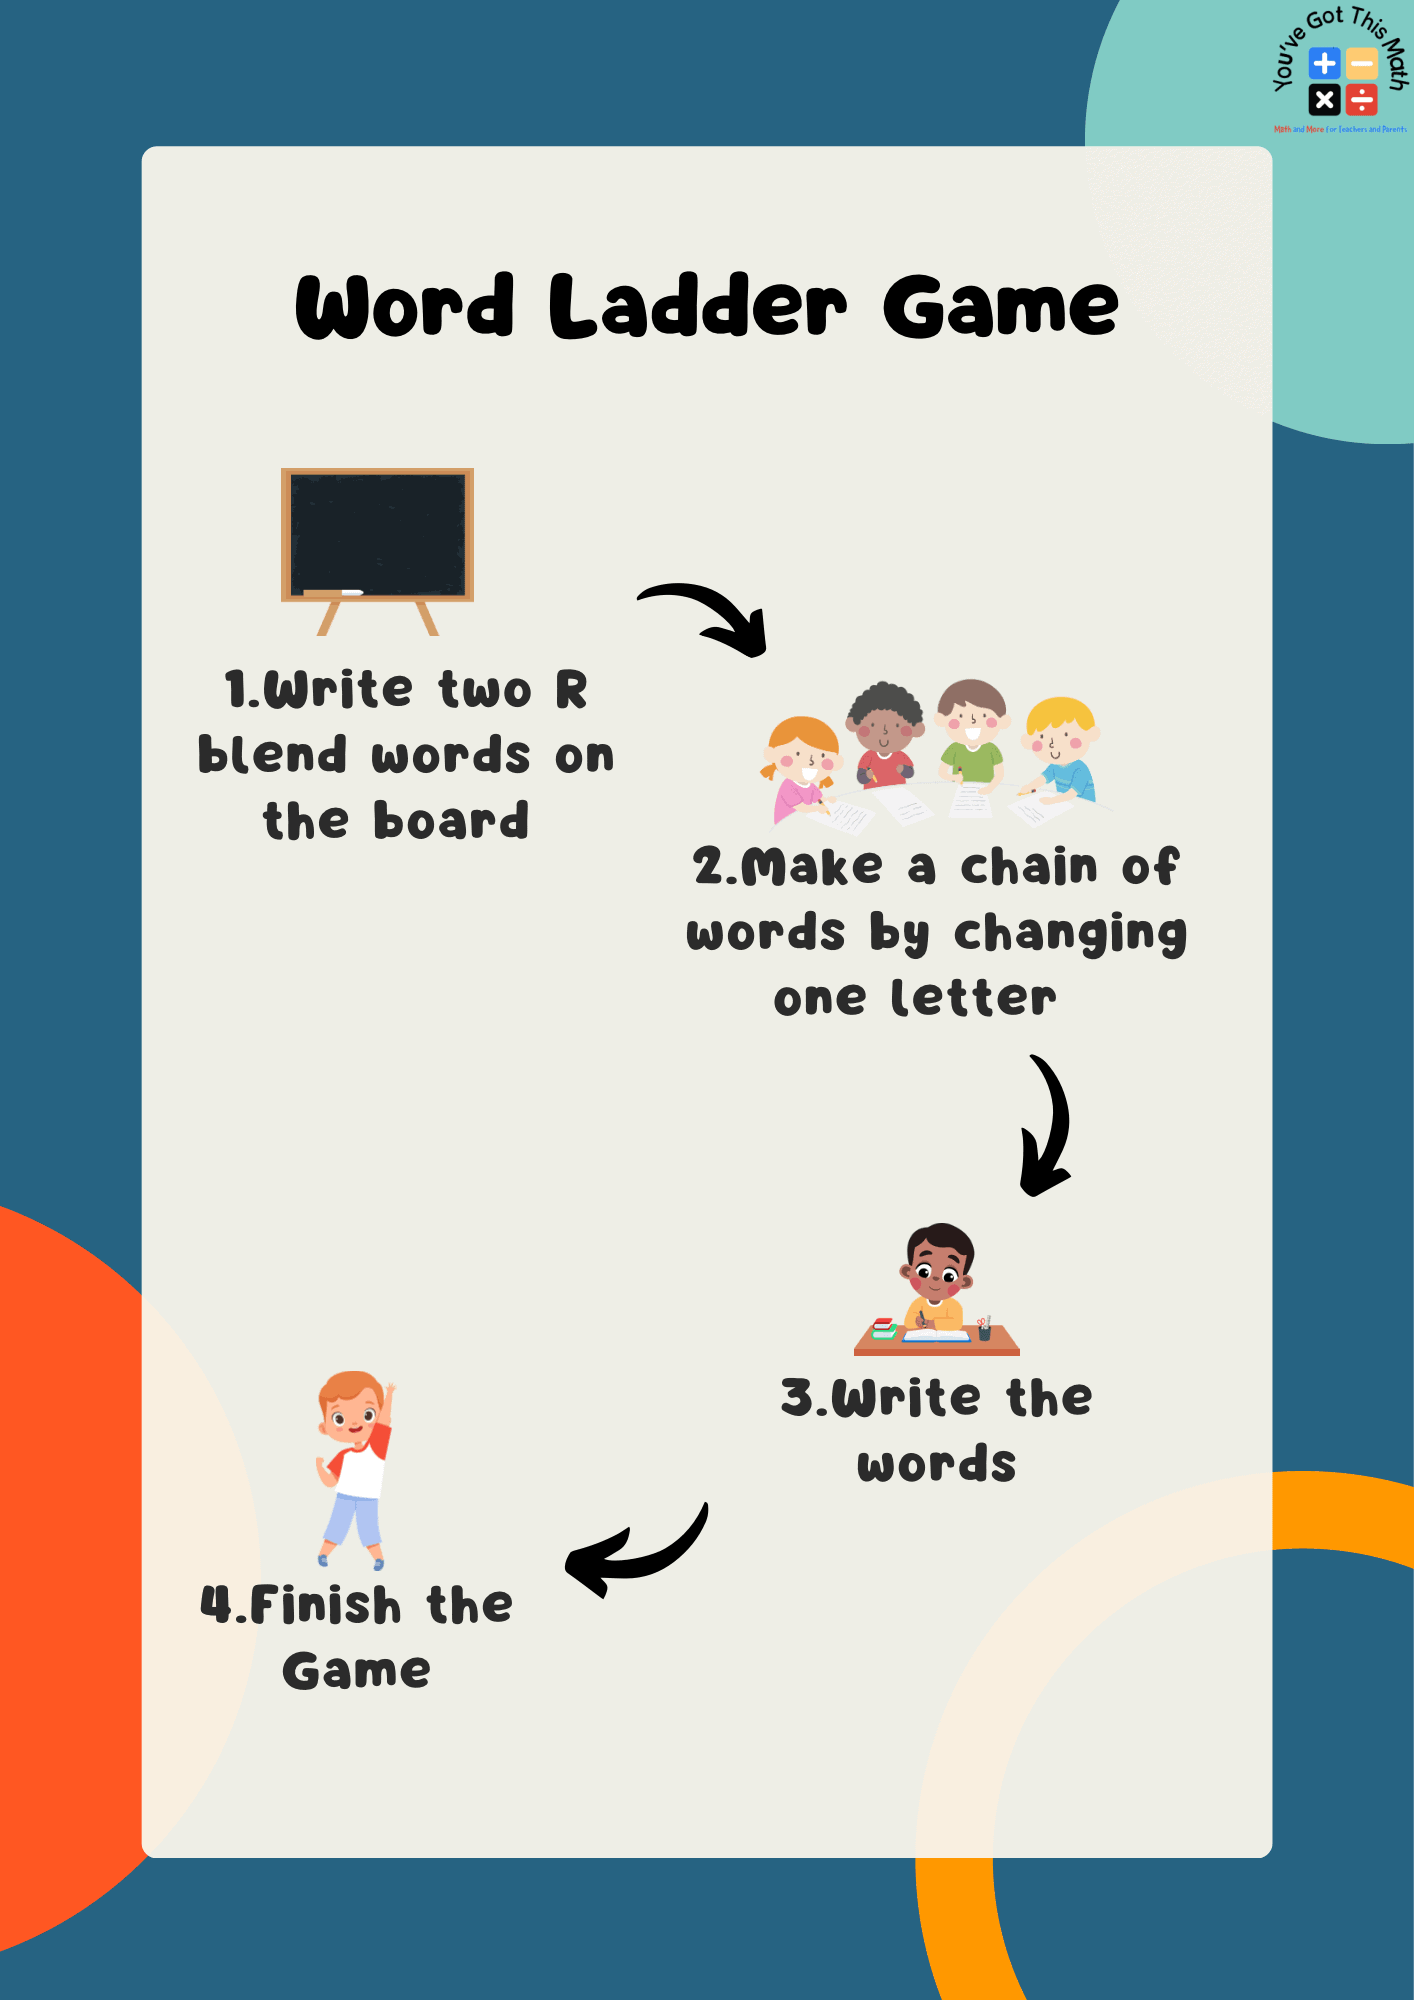 steps of word ladder game to find r blend words